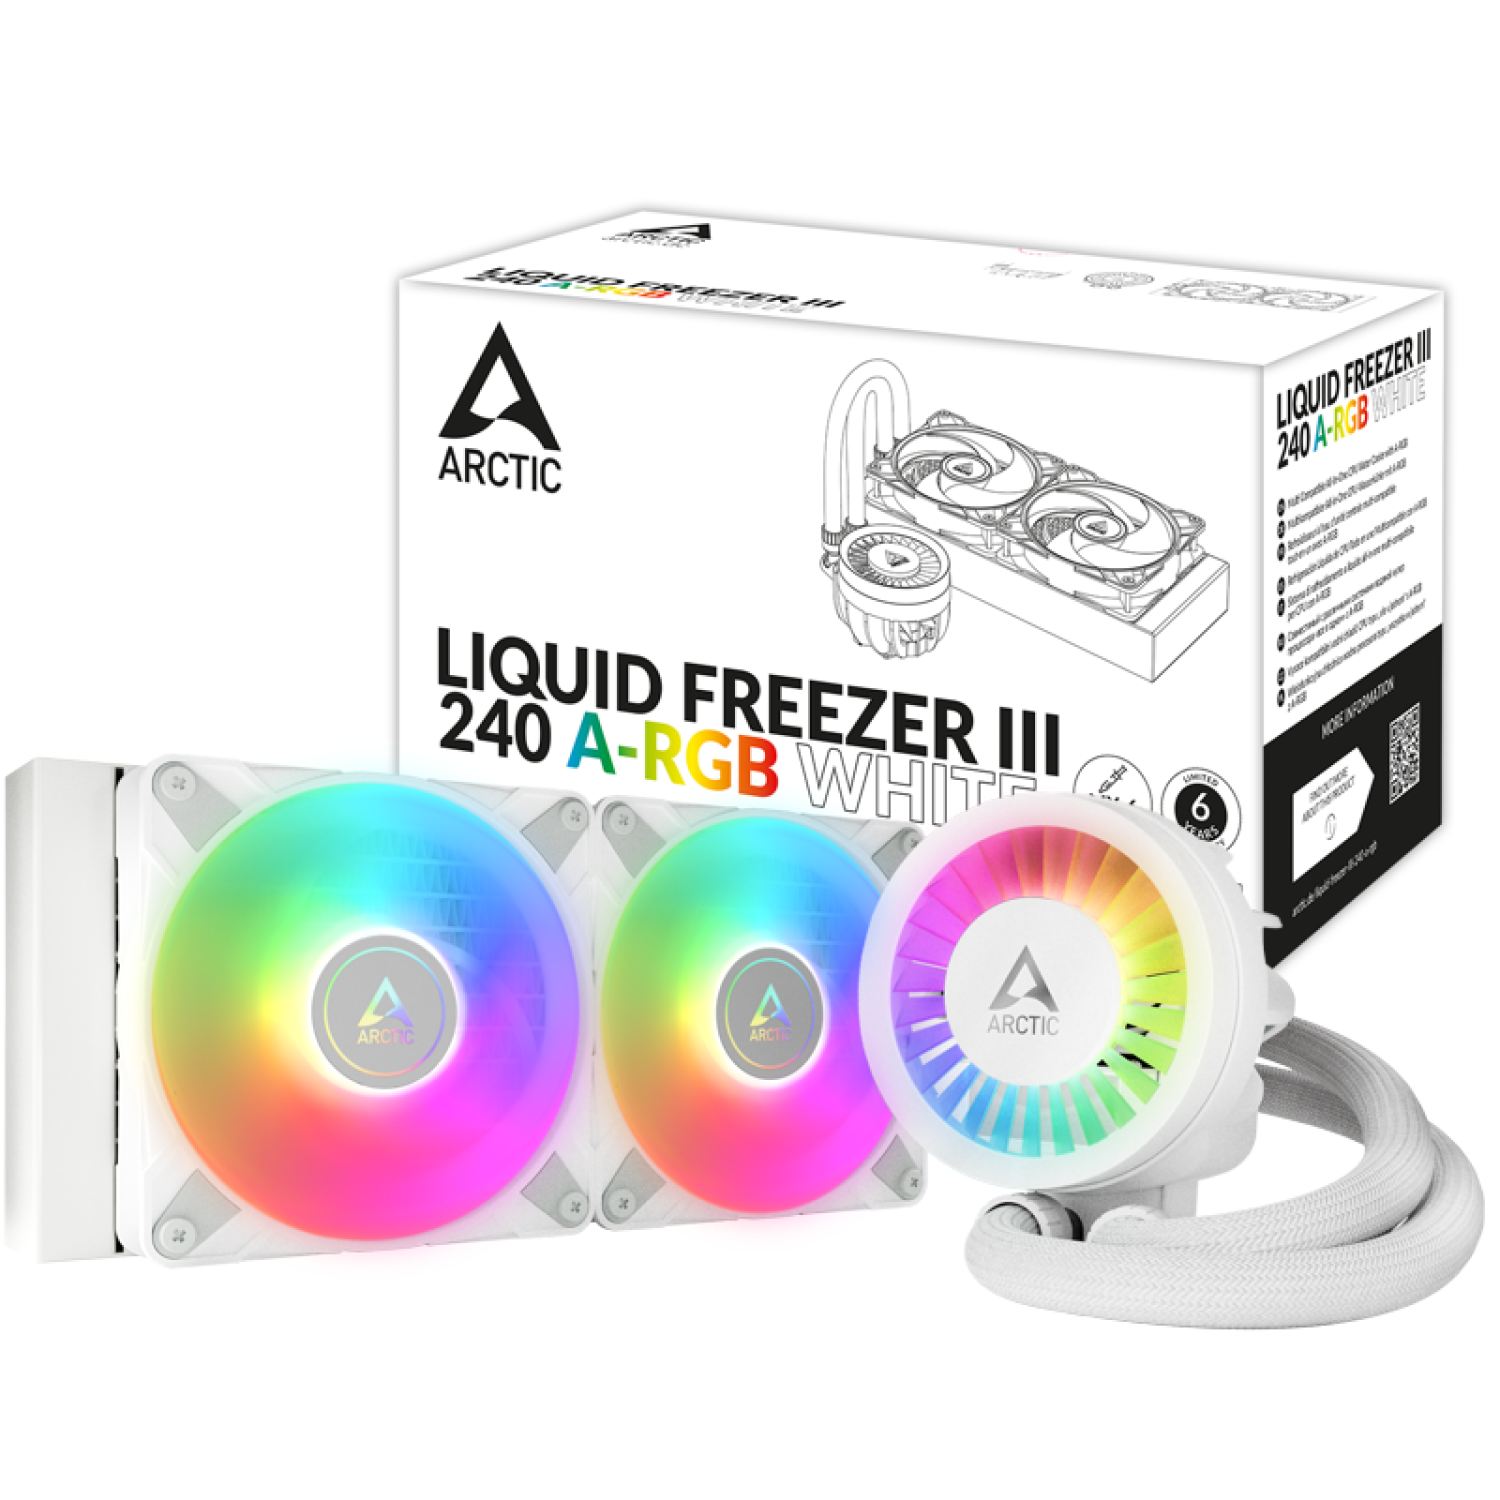 Liquid Freezer III 240 A-RGB (White)